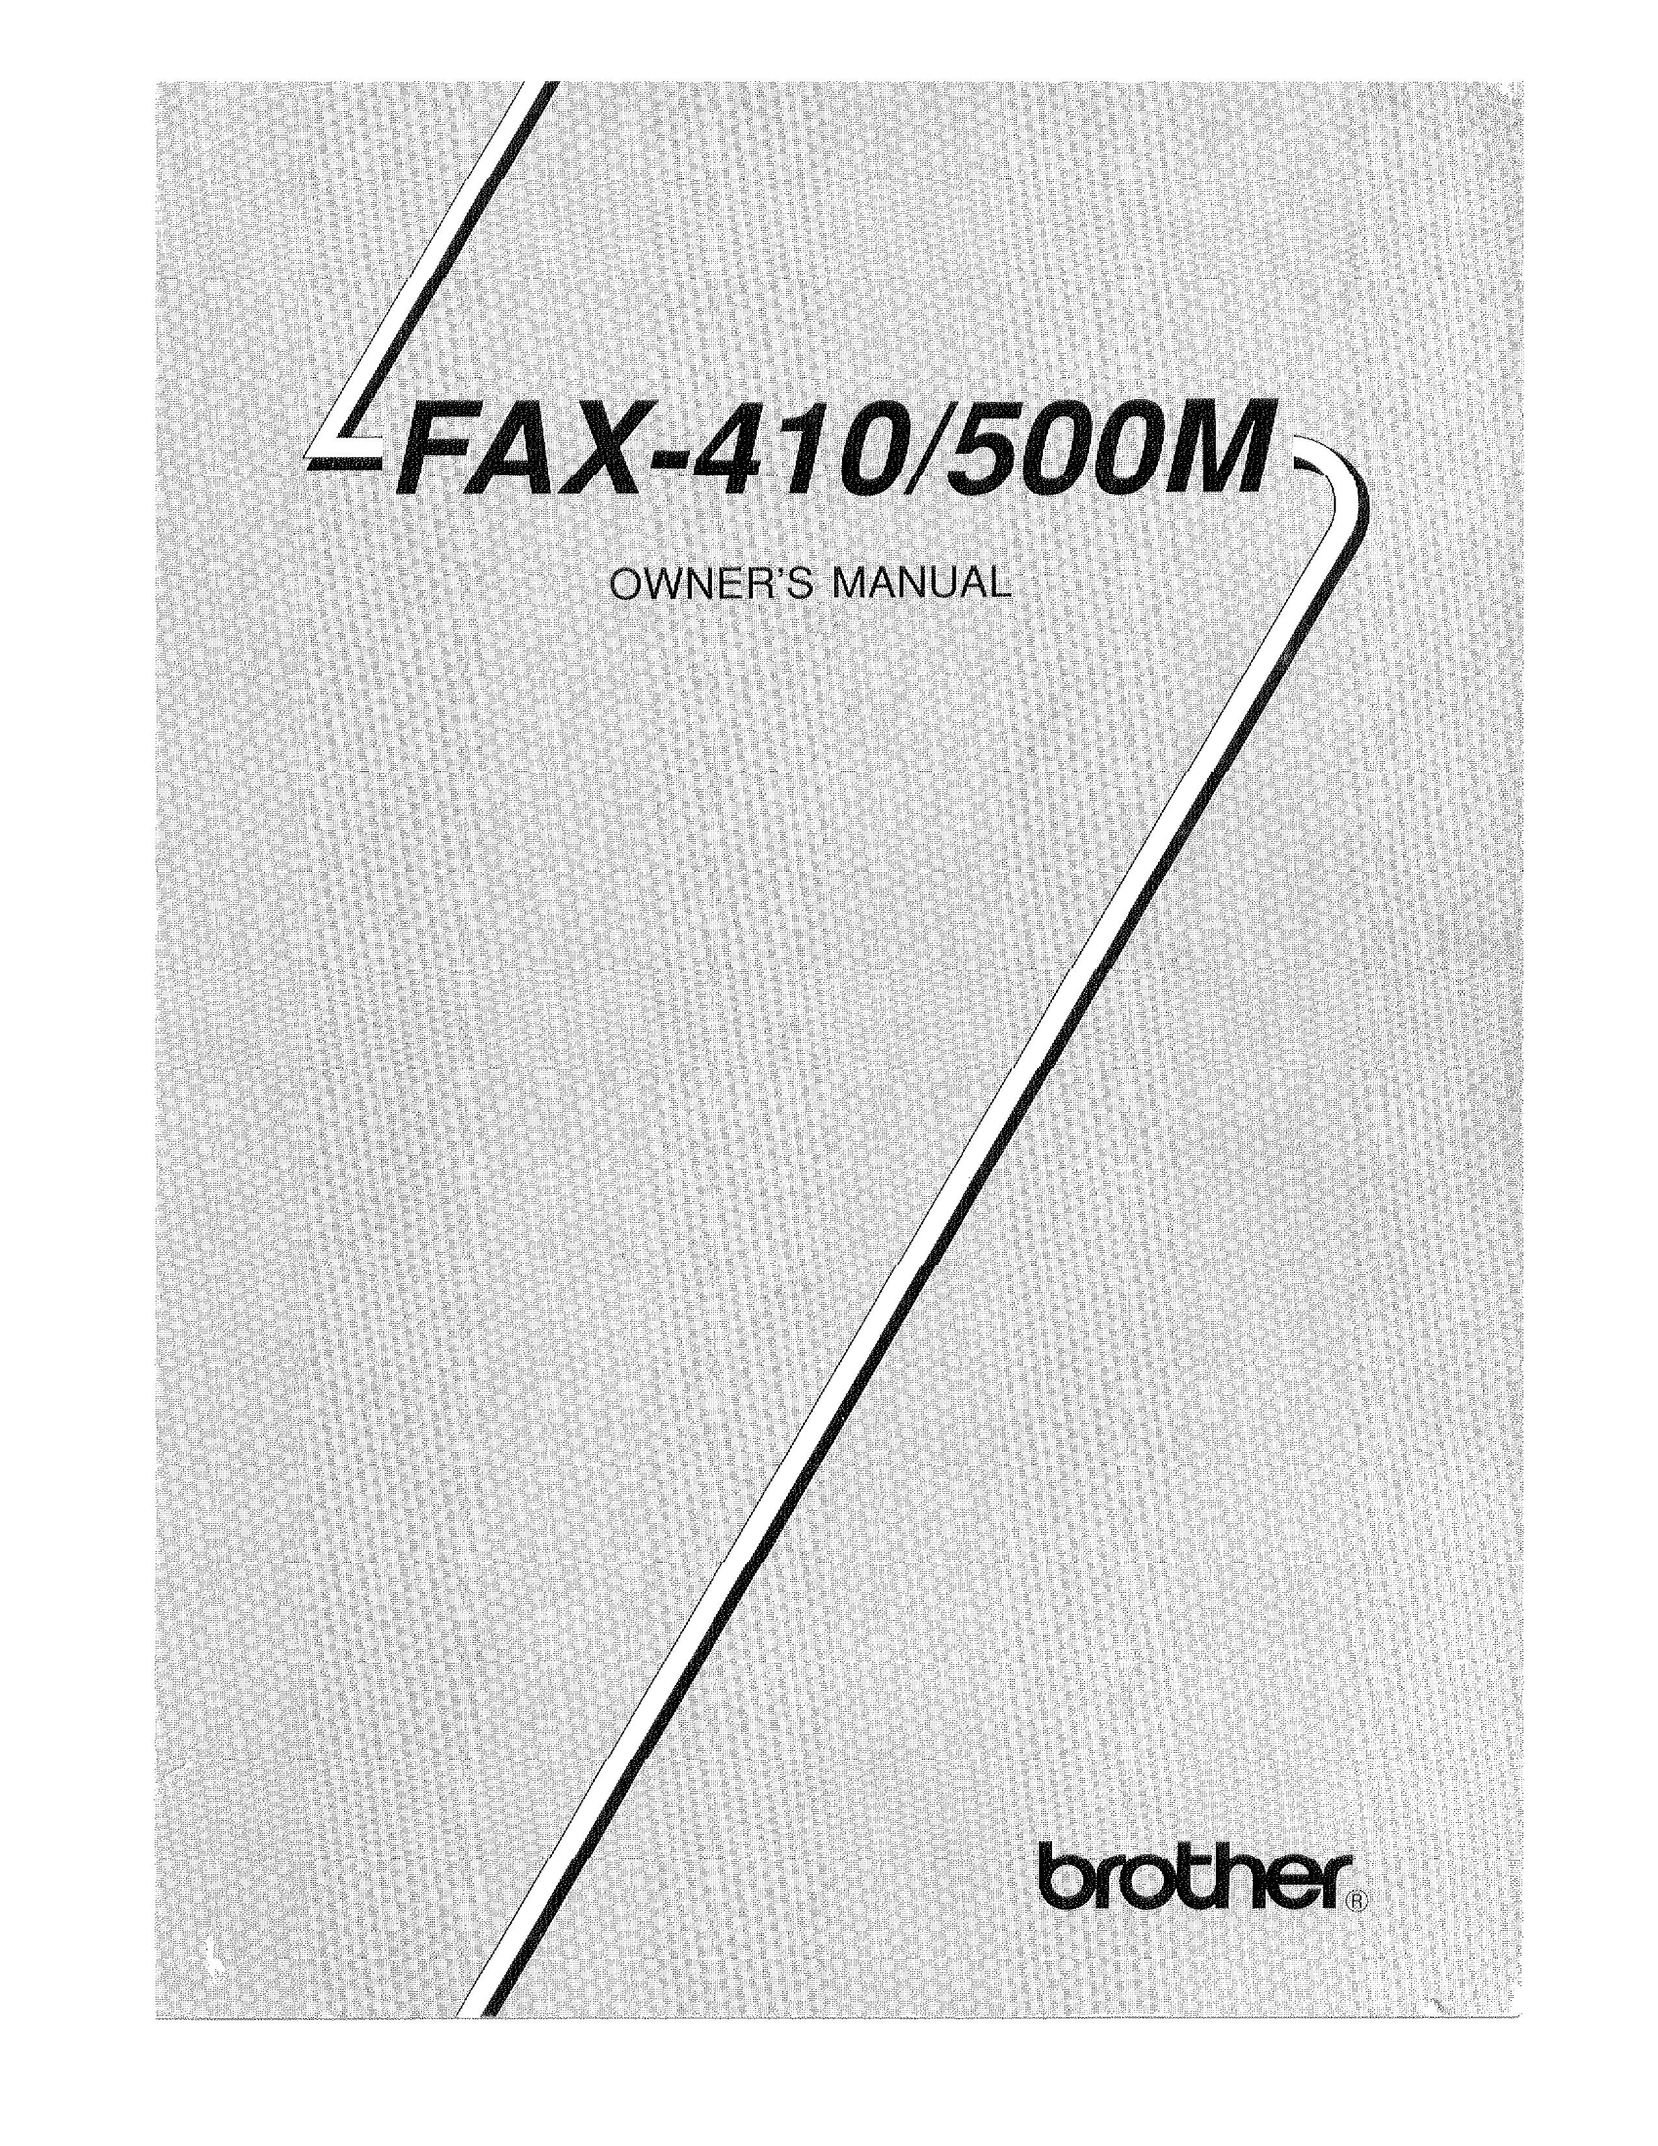 Brother 410/500M Fax Machine User Manual